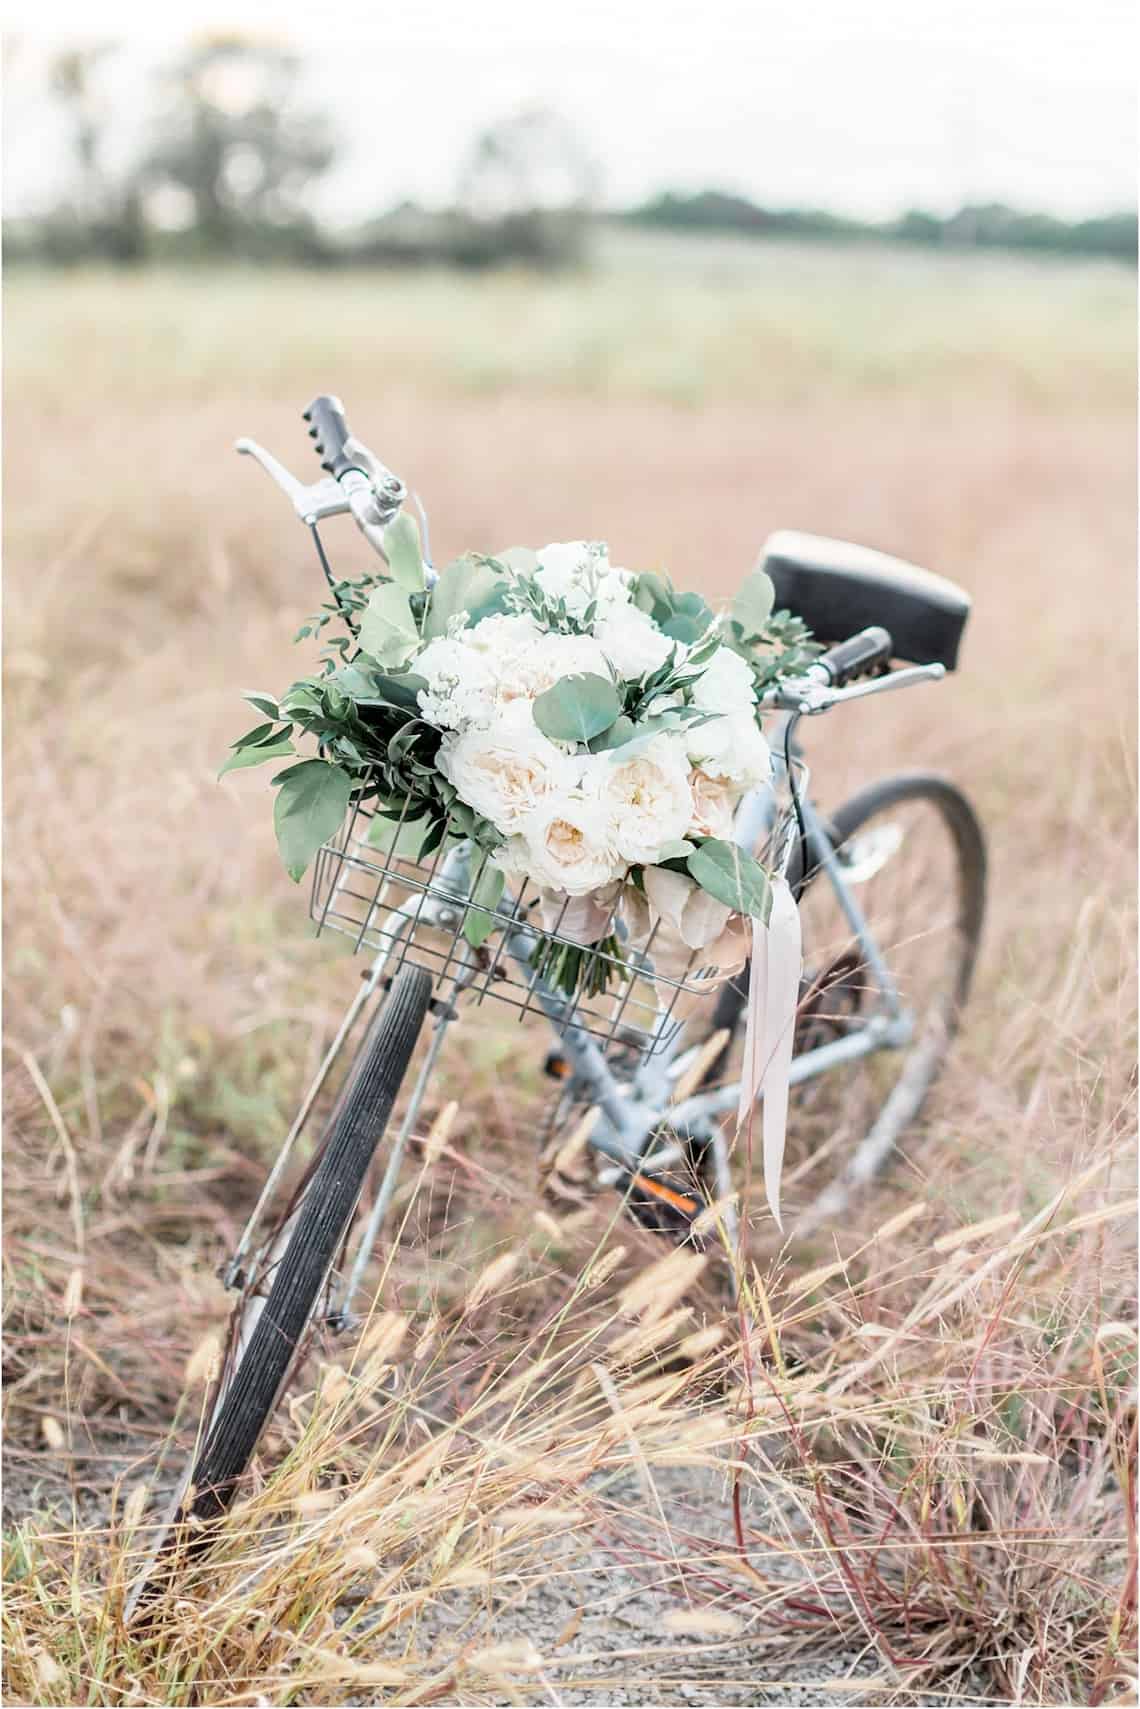 Wedding Bike with Bouquet in Basket